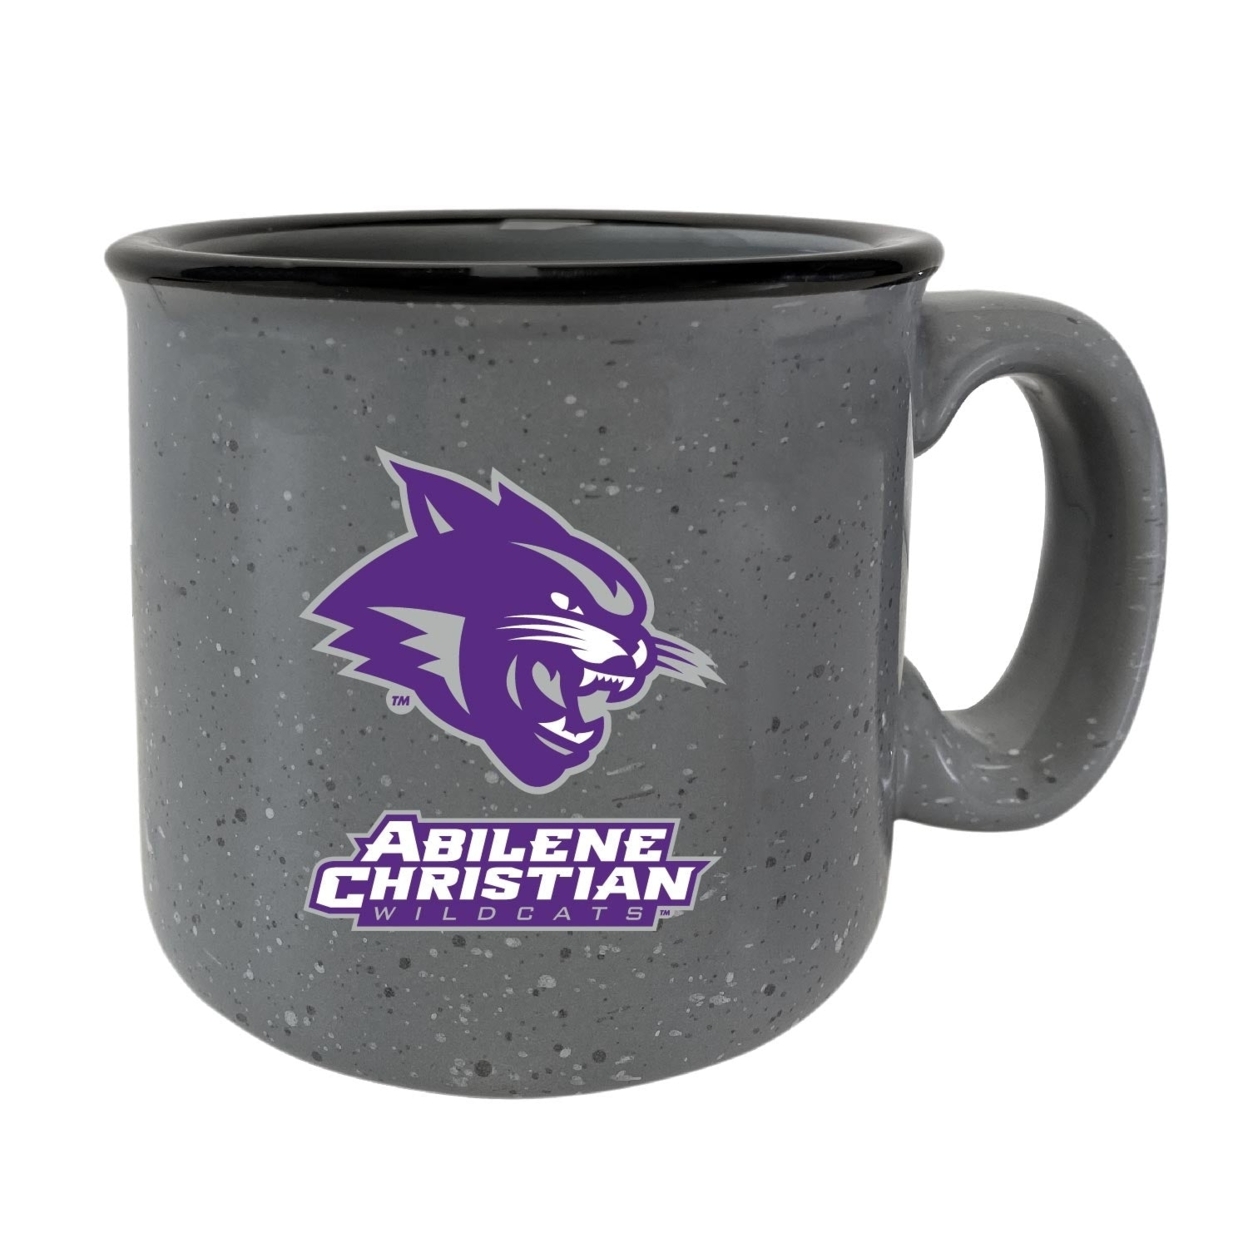 Abilene Christian University Speckled Ceramic Camper Coffee Mug - Choose Your Color - Grey